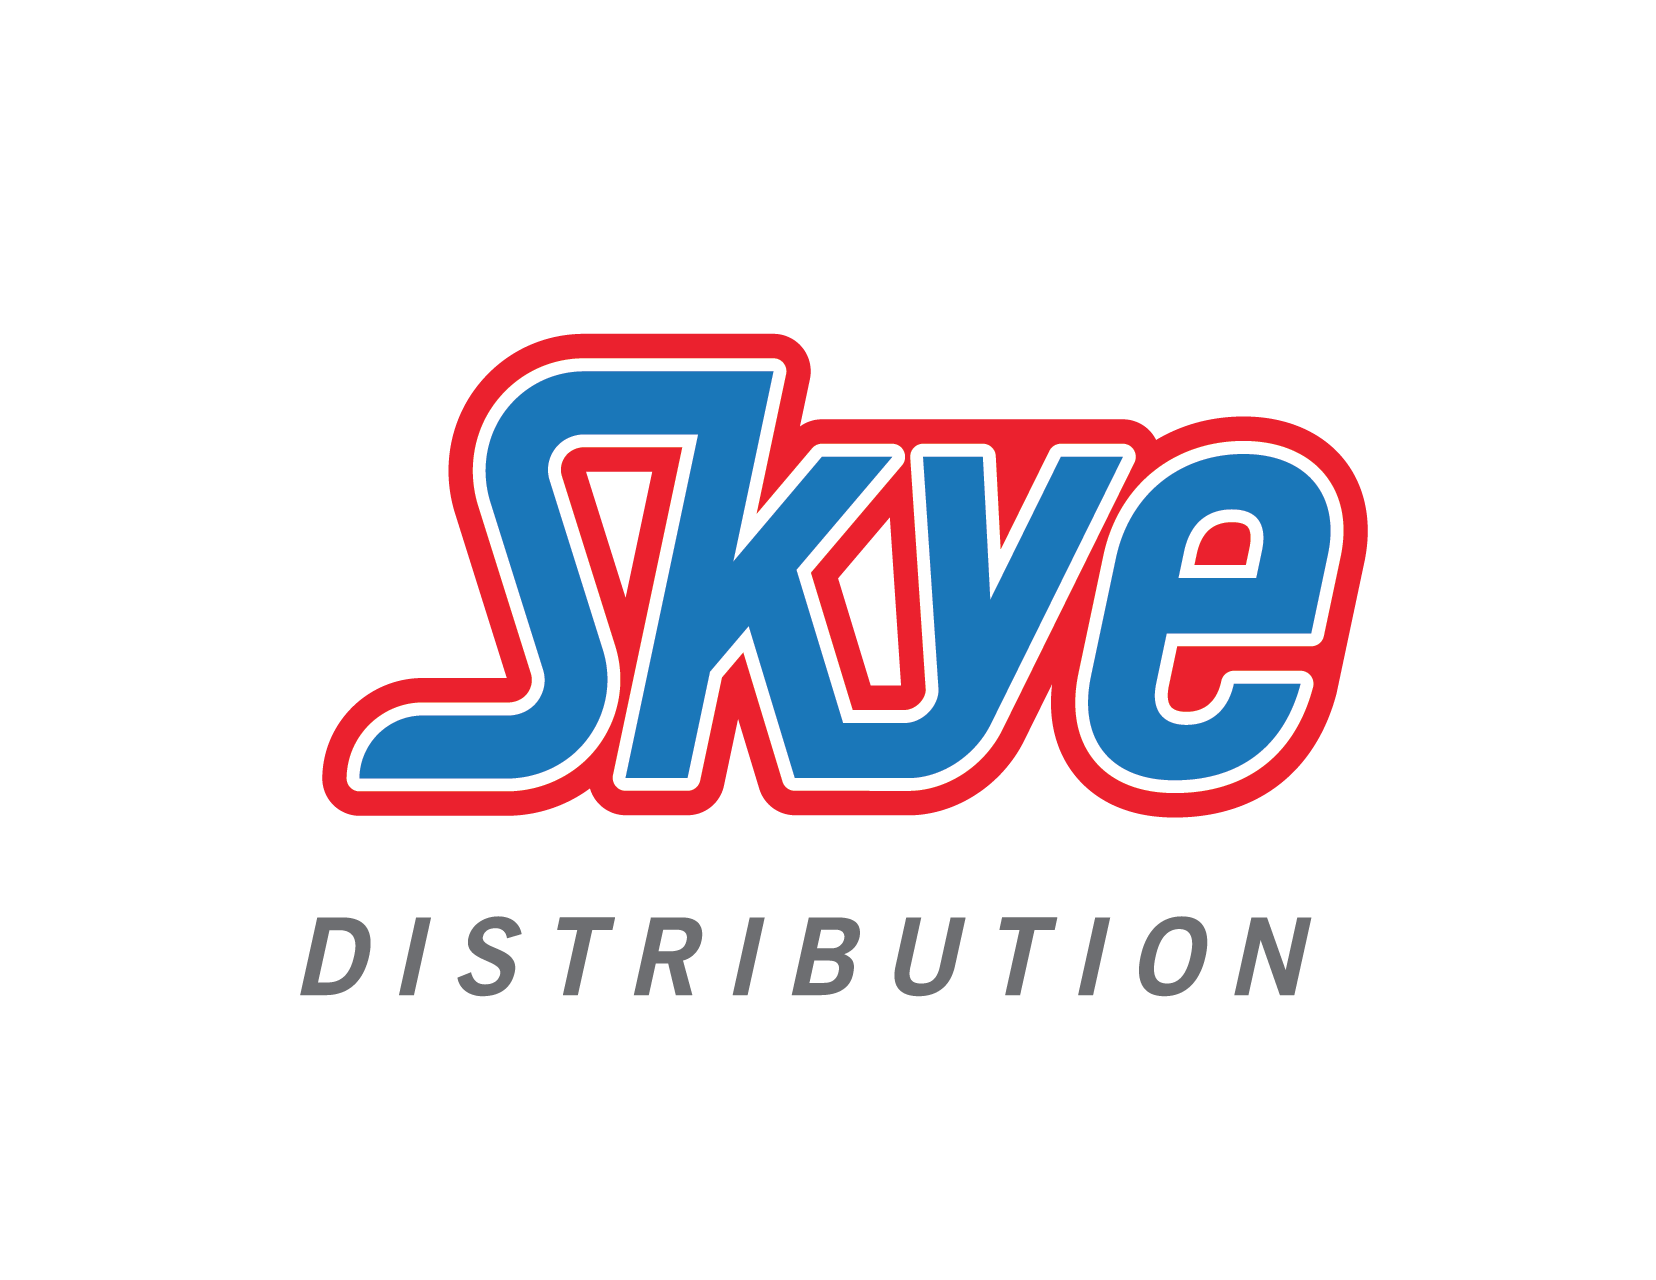 Skye Distribution Logo